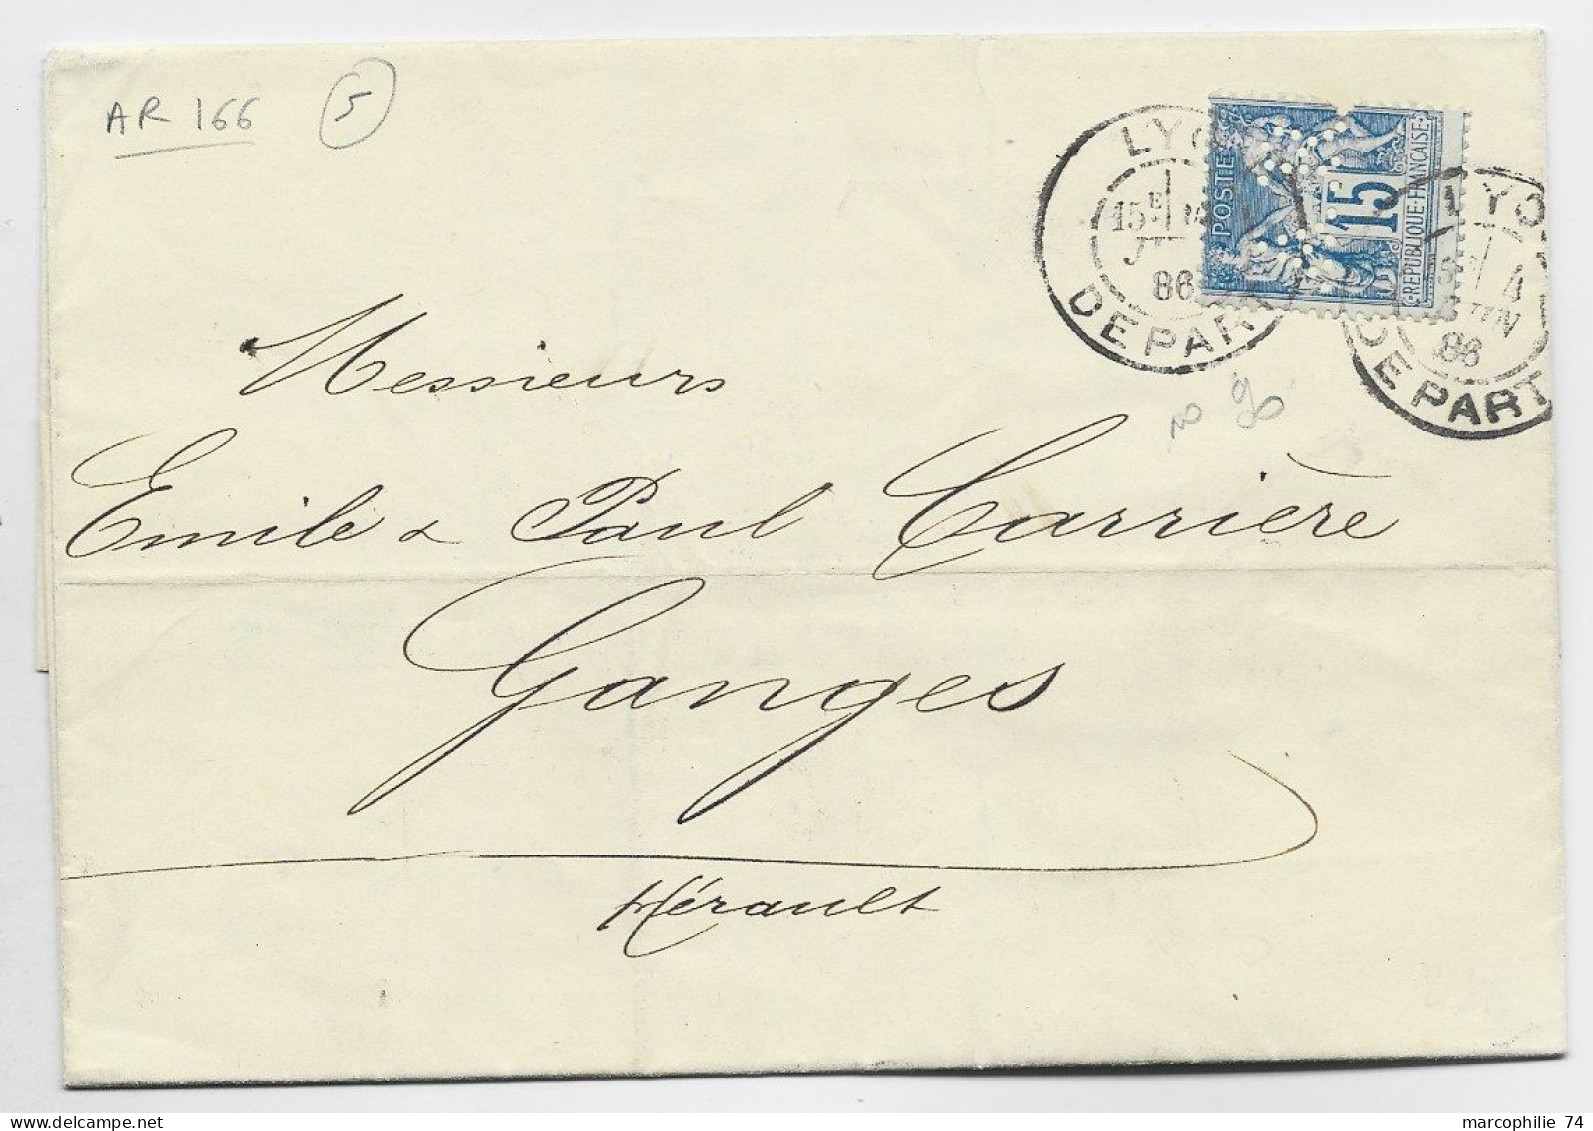 SAGE 15C PERFORE A.R. LYON DEPART 1886 LETTRE TEXTE AYNARD & RUFFER LYON ET LONDRES PEU COMMUN - Storia Postale